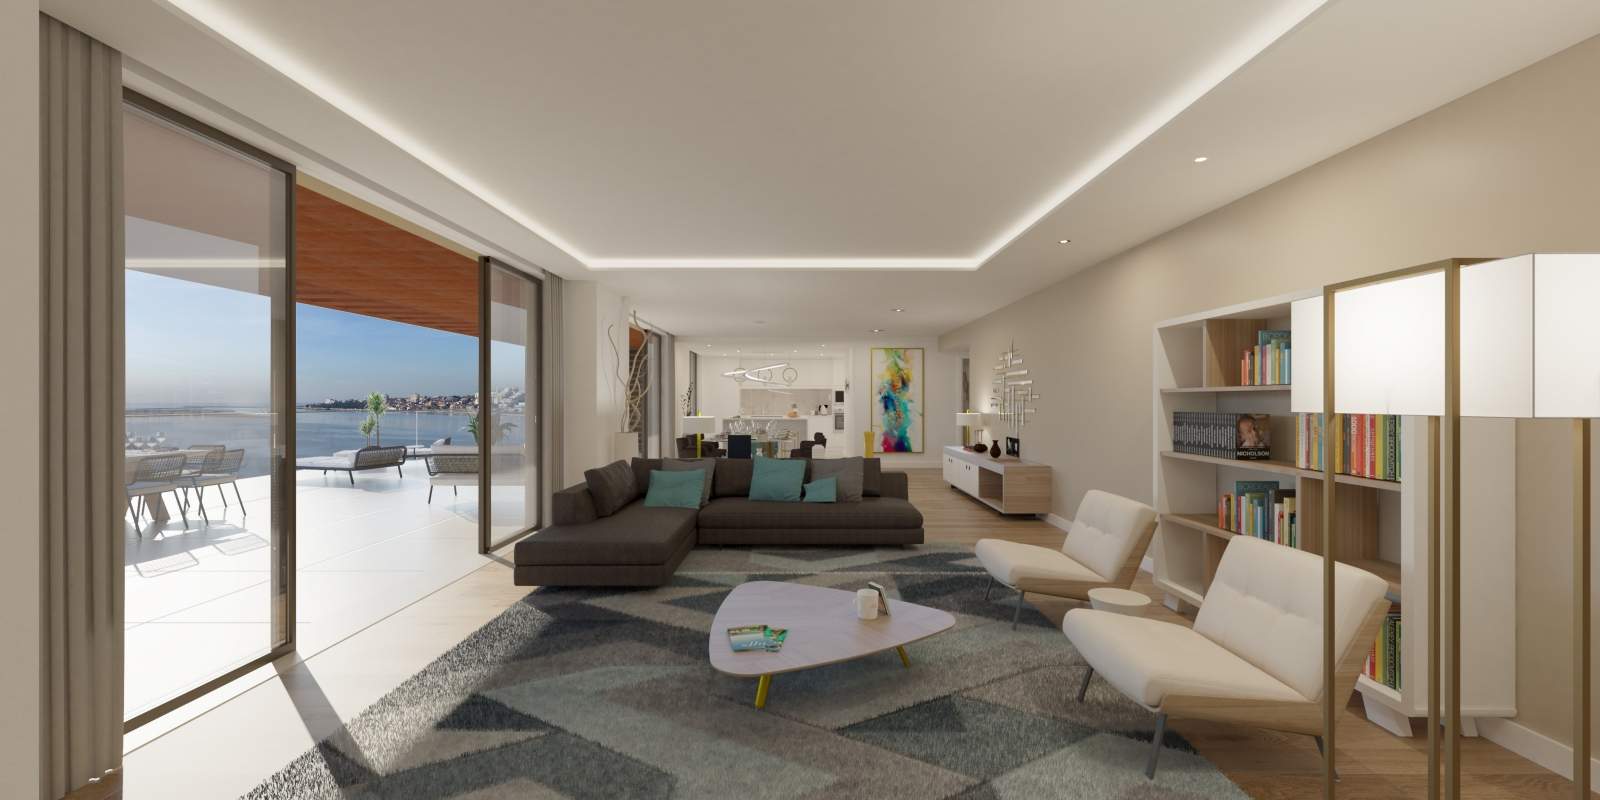 Apartment for sale with terrace, in exclusive condominium, V. N. Gaia, Porto, Portugal_175775